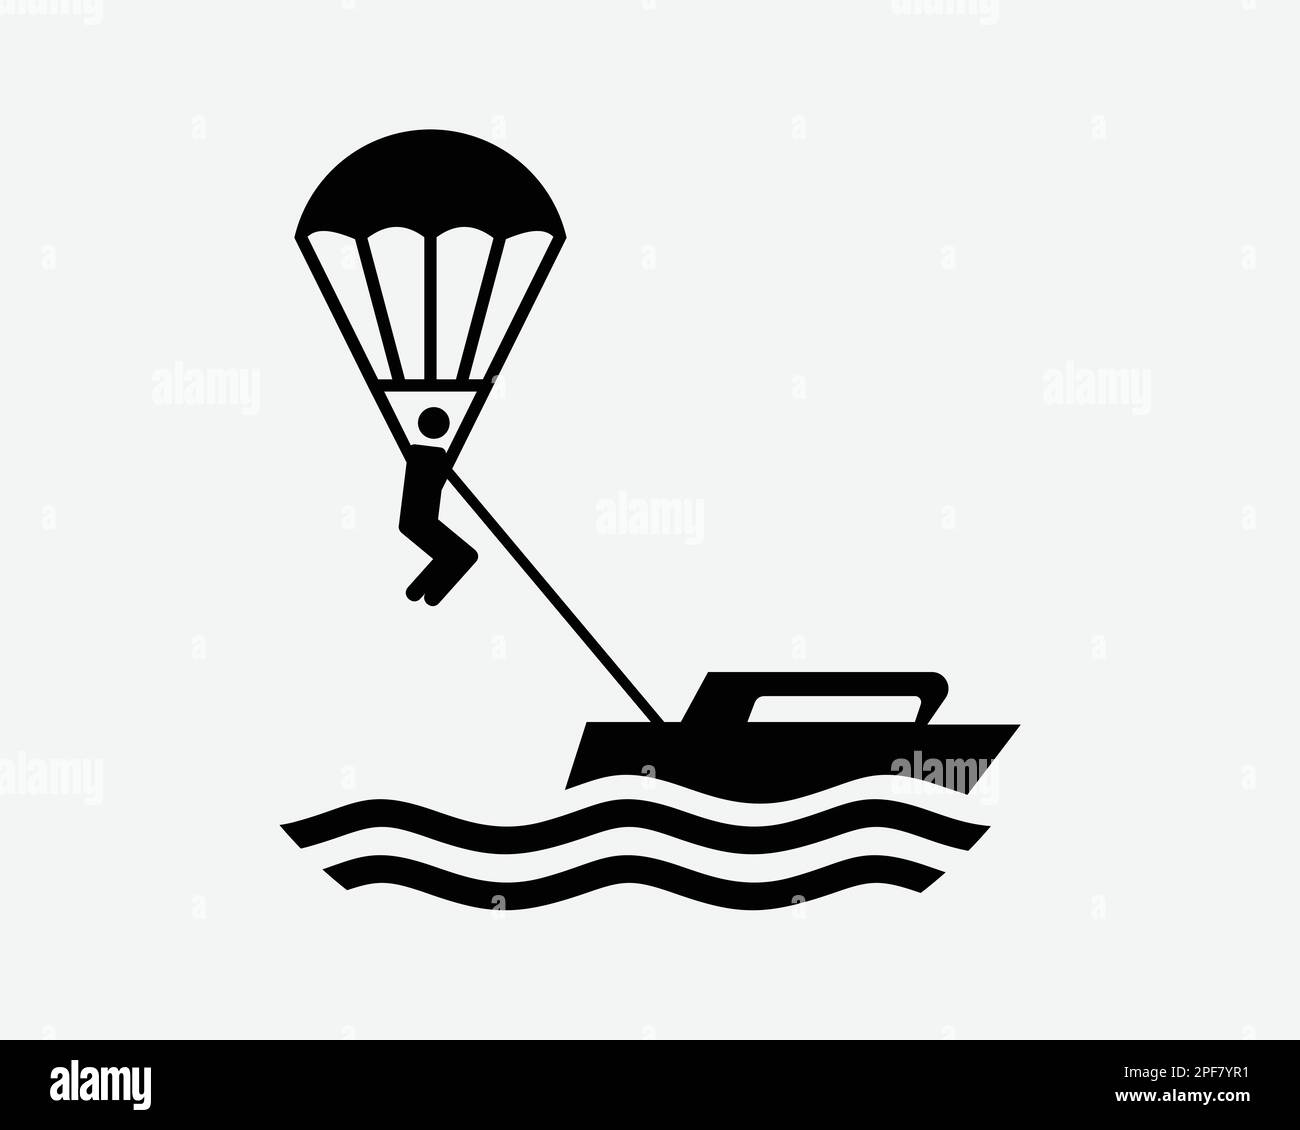 Sailboat Icon Sail Boat Wind Ship Yacht Sea Wave Ocean Lake Vector Black White Silhouette Symbol Sign Graphic Clipart Artwork Illustration Pictogram Stock Vector